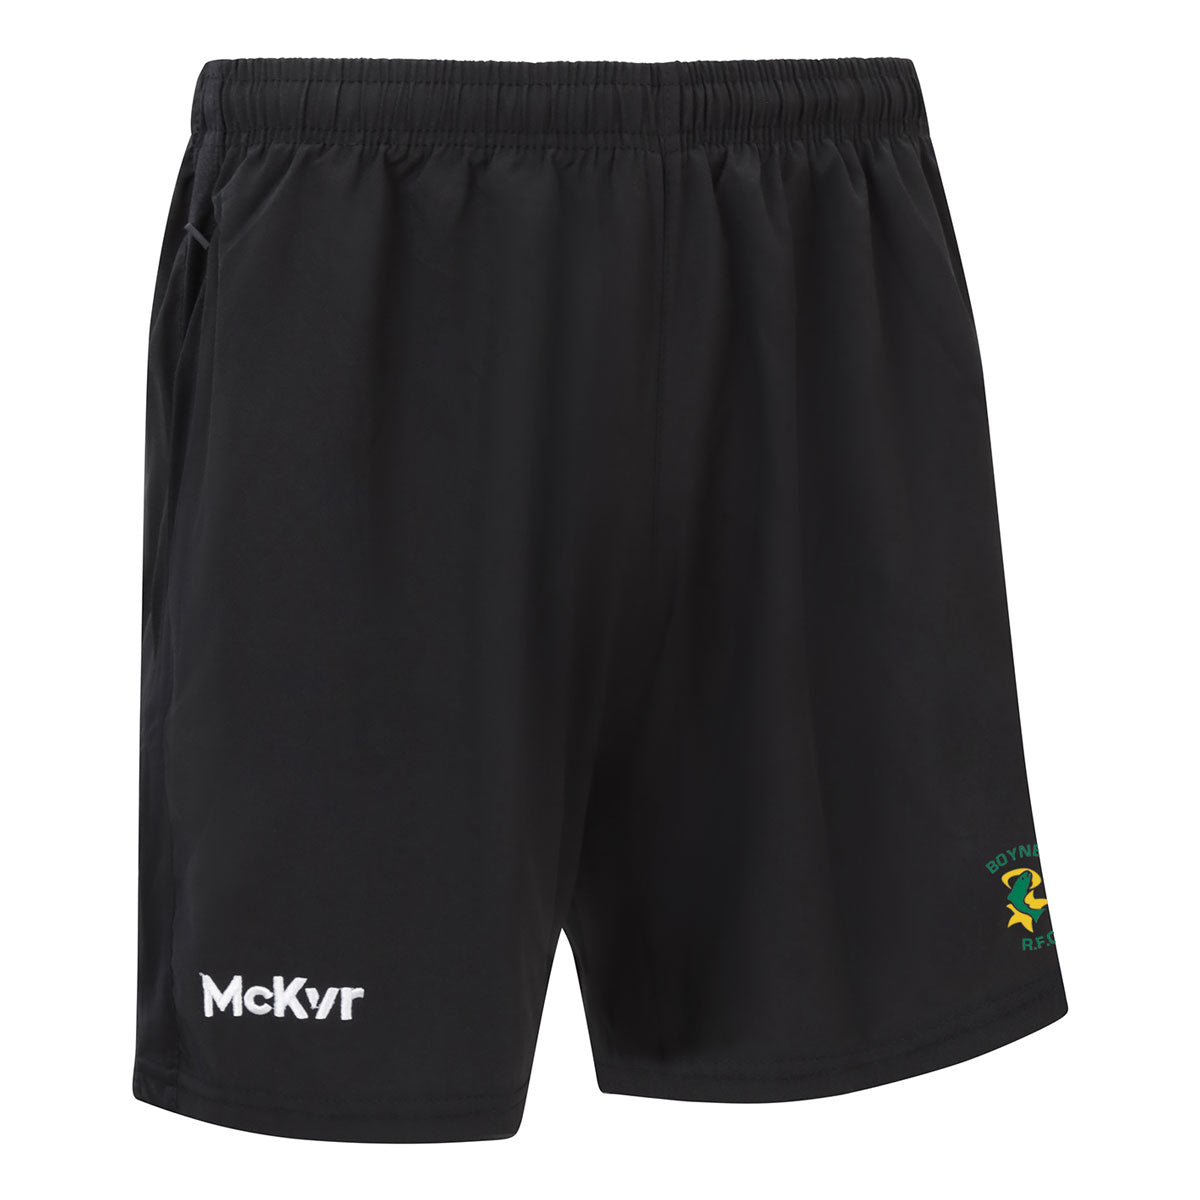 Mc Keever Boyne RFC Core 22 Leisure Shorts - Adult - Black